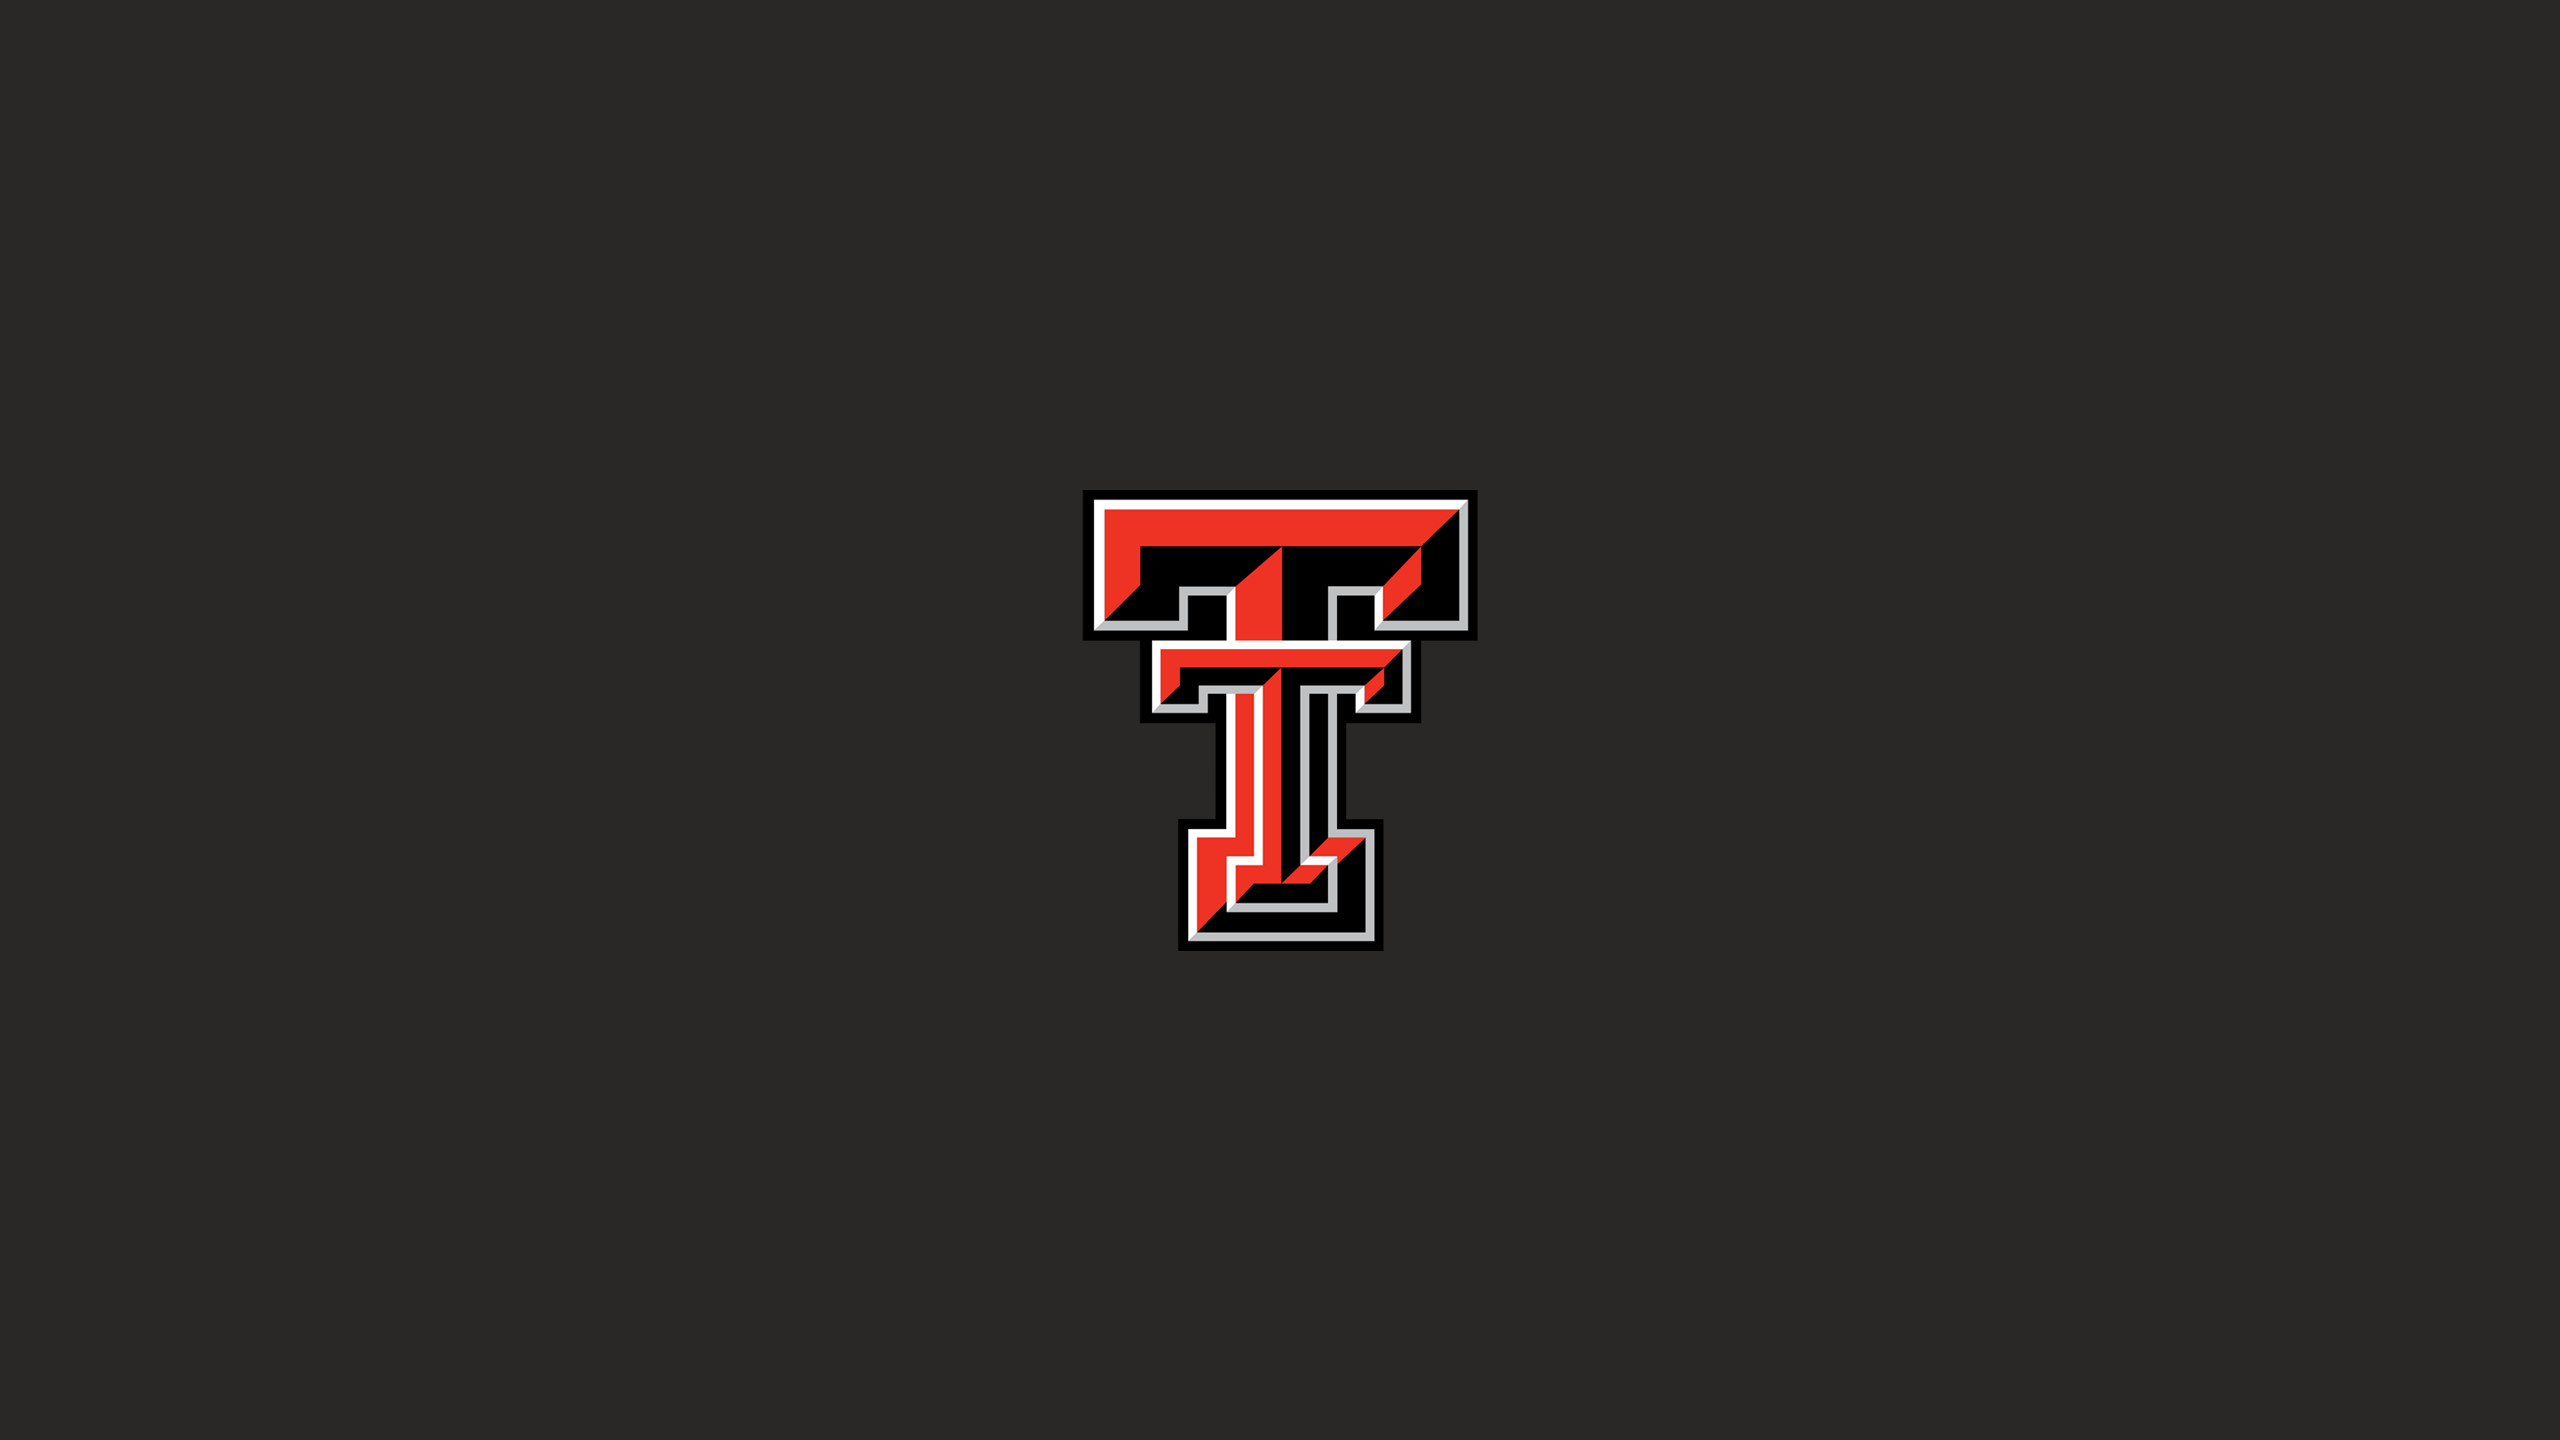 2560x1440 Texas Tech University Red Raiders – Stephen Clark (sgclark.com)